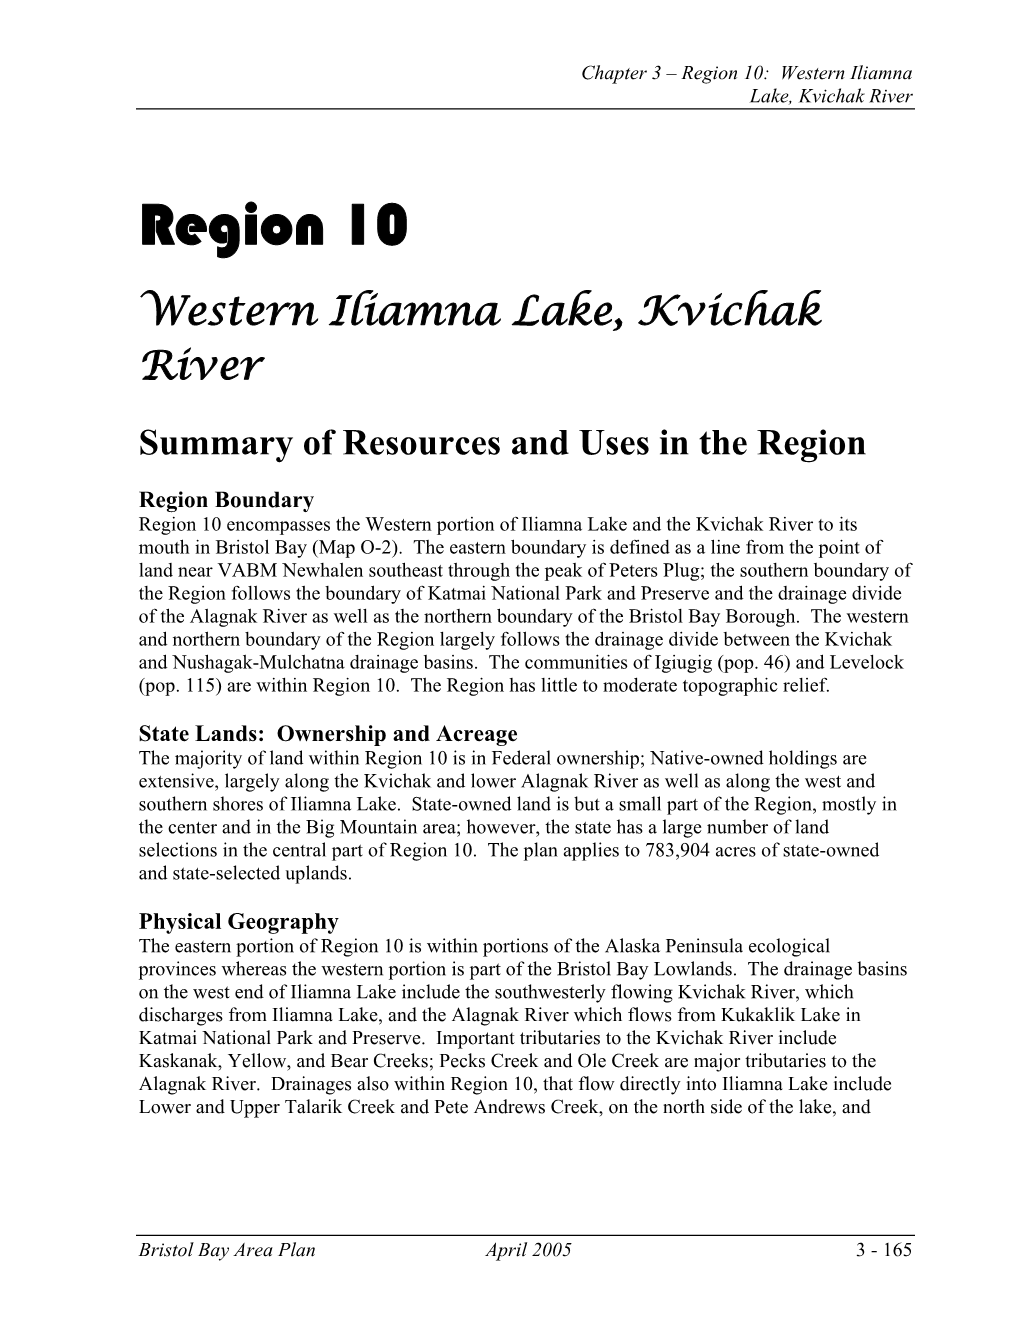 Region 10: Western Iliamna Lake, Kvichak River